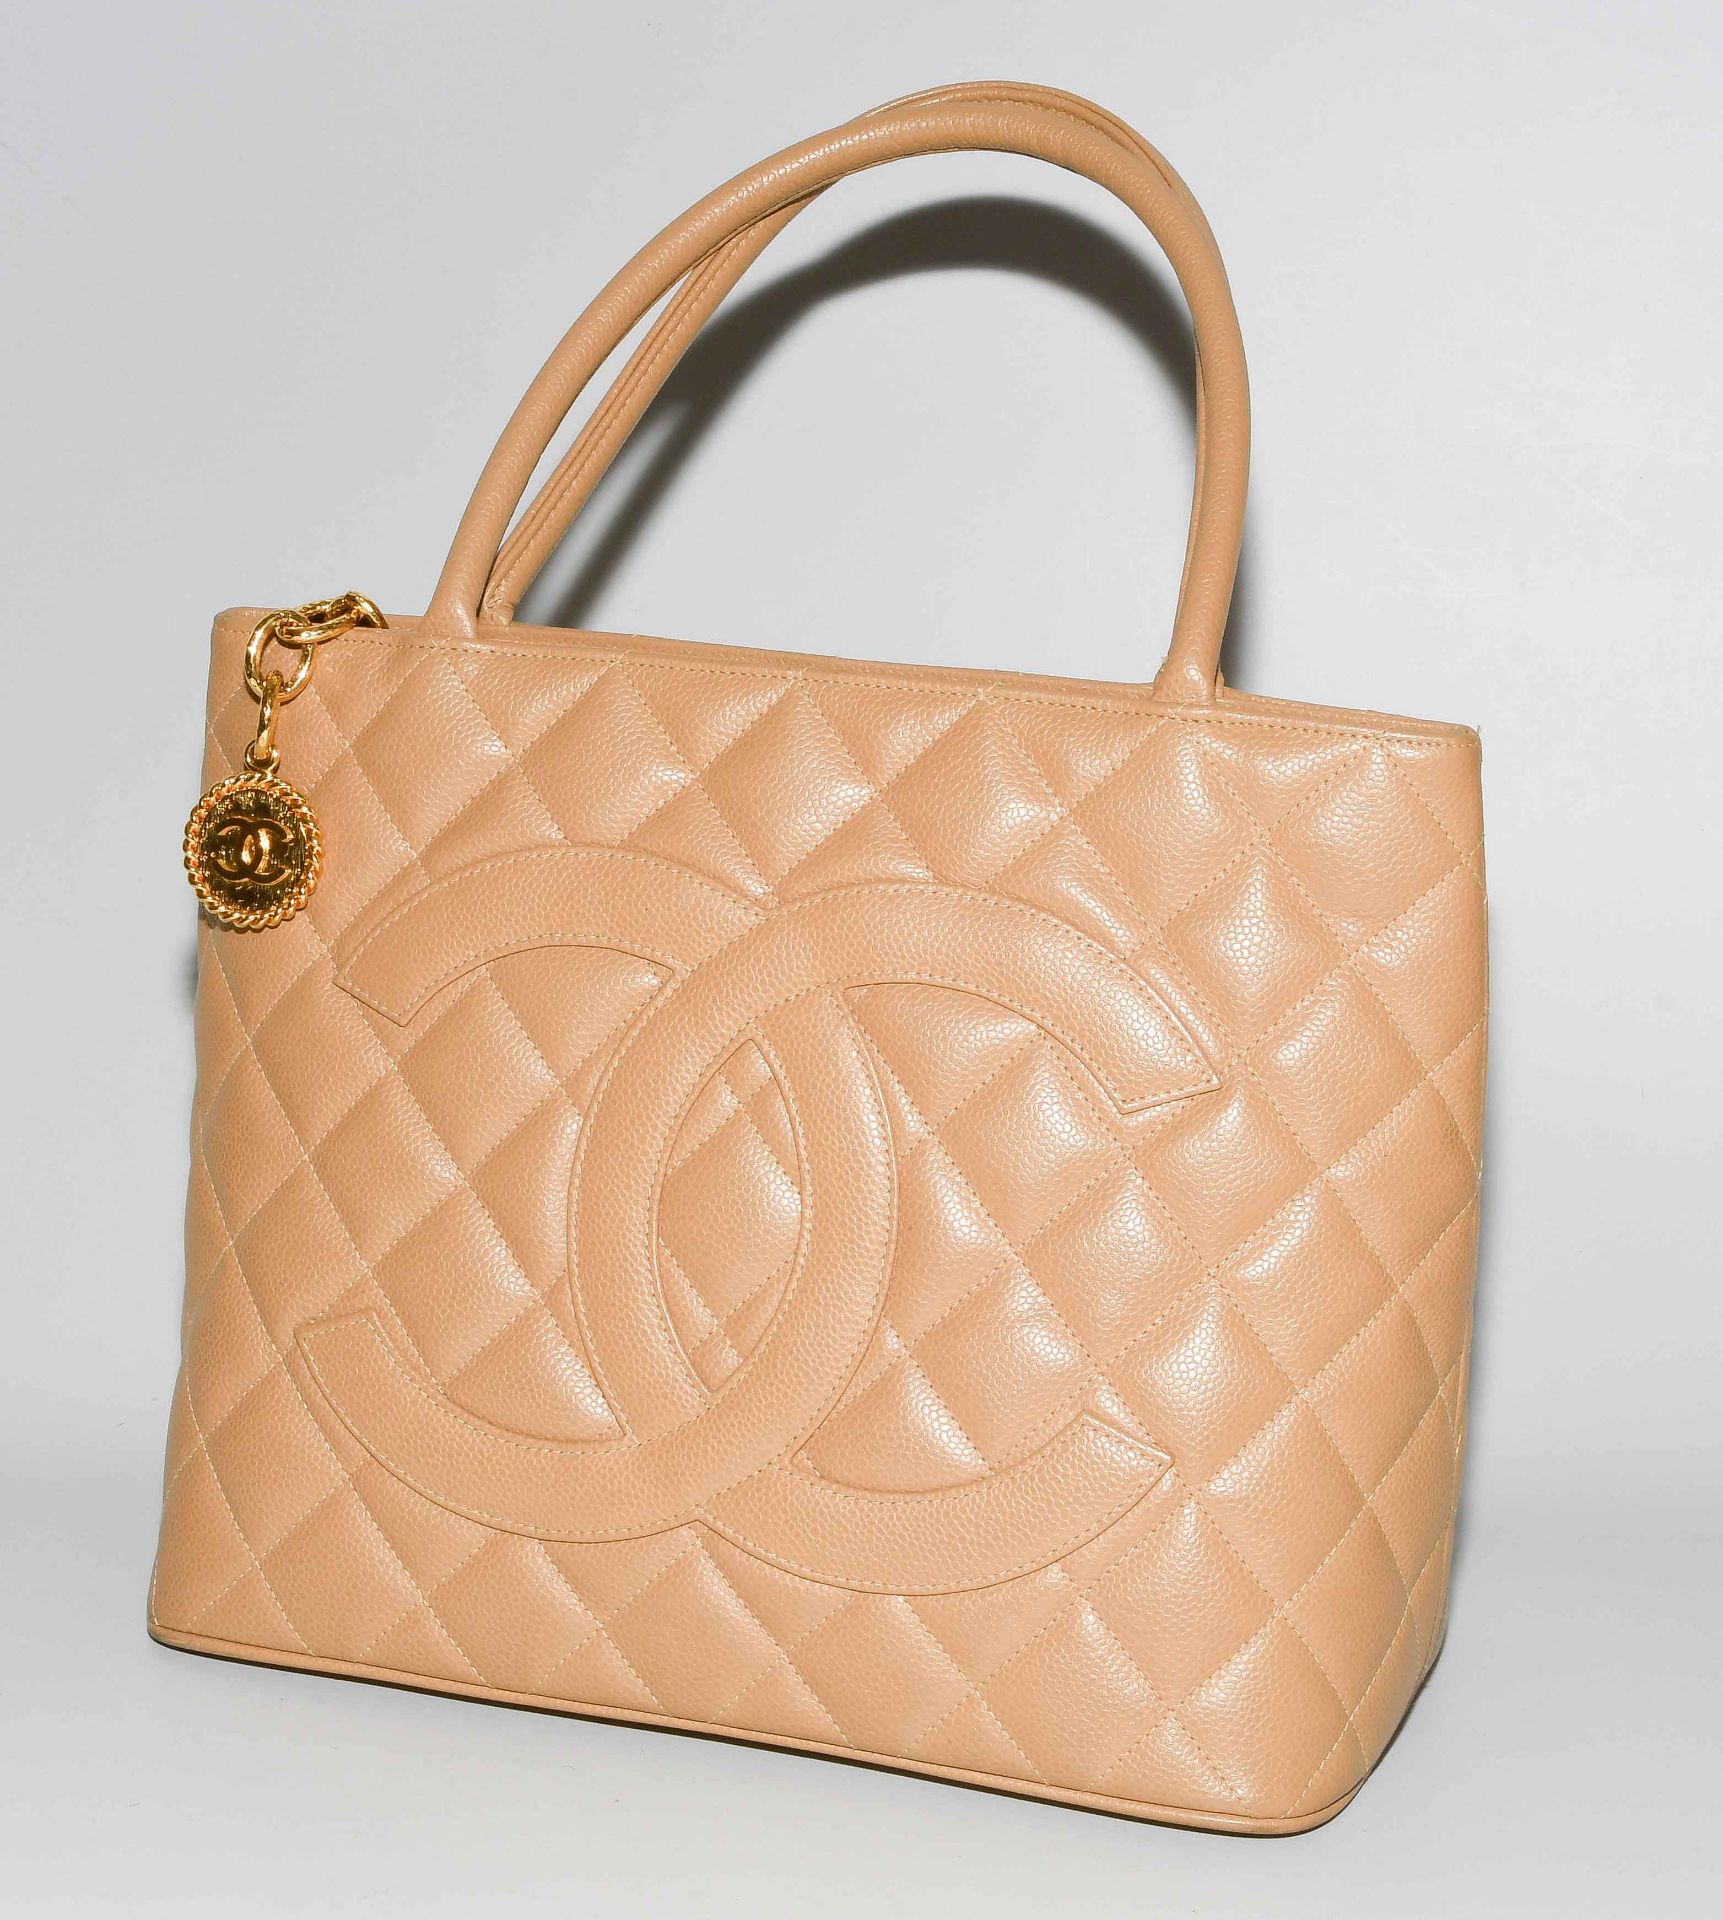 Chanel, Handtasche "Medaillon" - Image 2 of 10